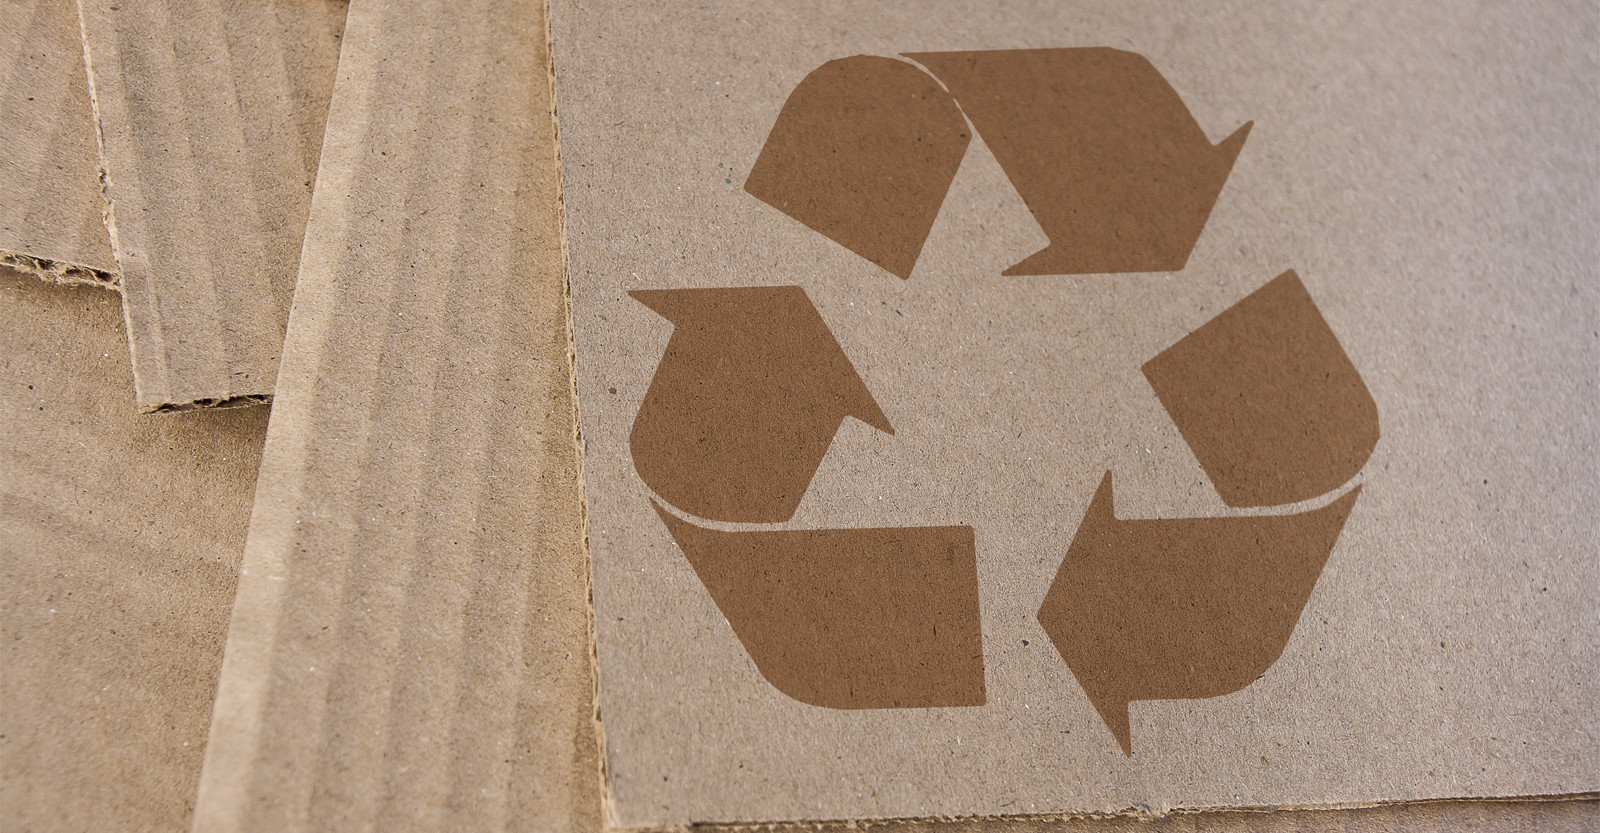 Recycling mark on cardboard